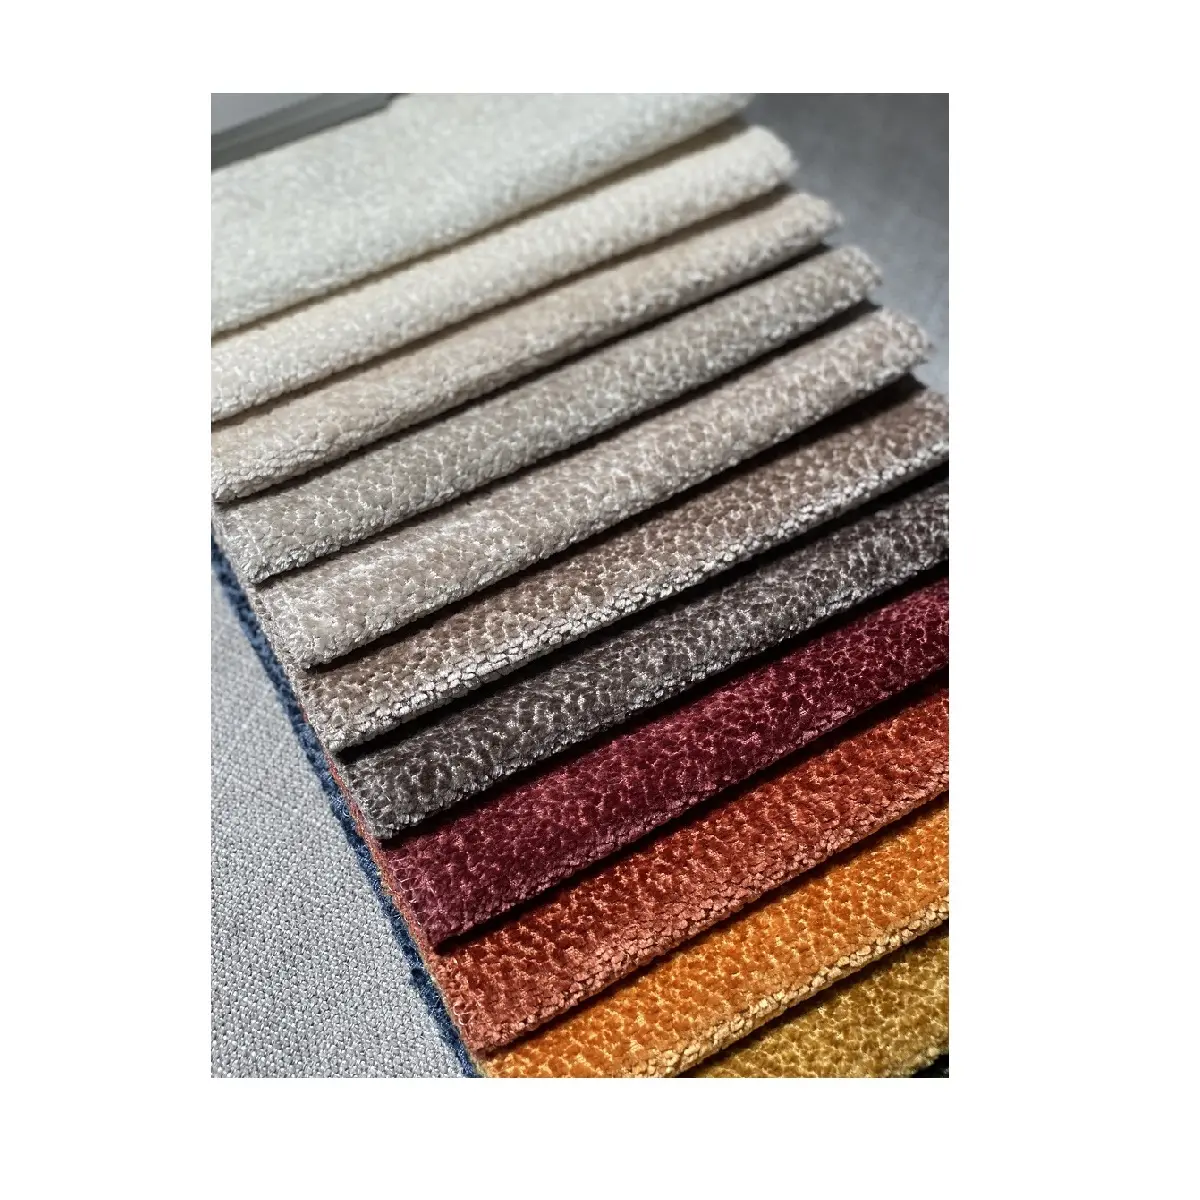 Tela de tapicería de terciopelo Tejido colorido Technic 50/52 "Ancho Peso medio Material transpirable Telas de tapicería Vietnam